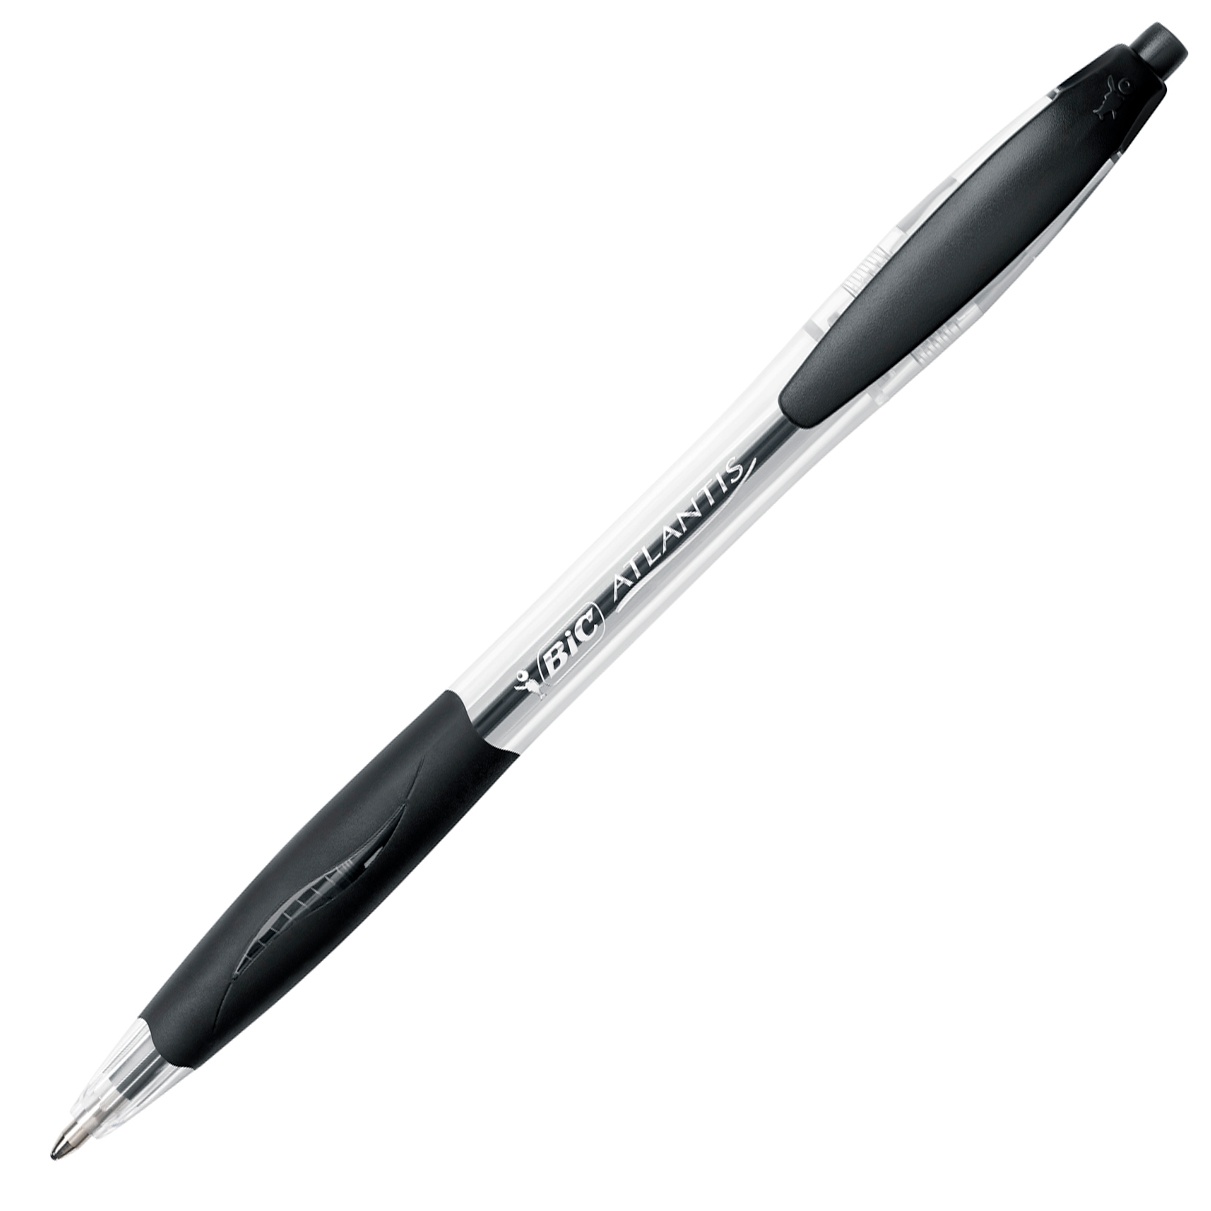 Atlantis Classic Ballpoint Pen in the group Pens / Writing / Ballpoints at Pen Store (100220_r)